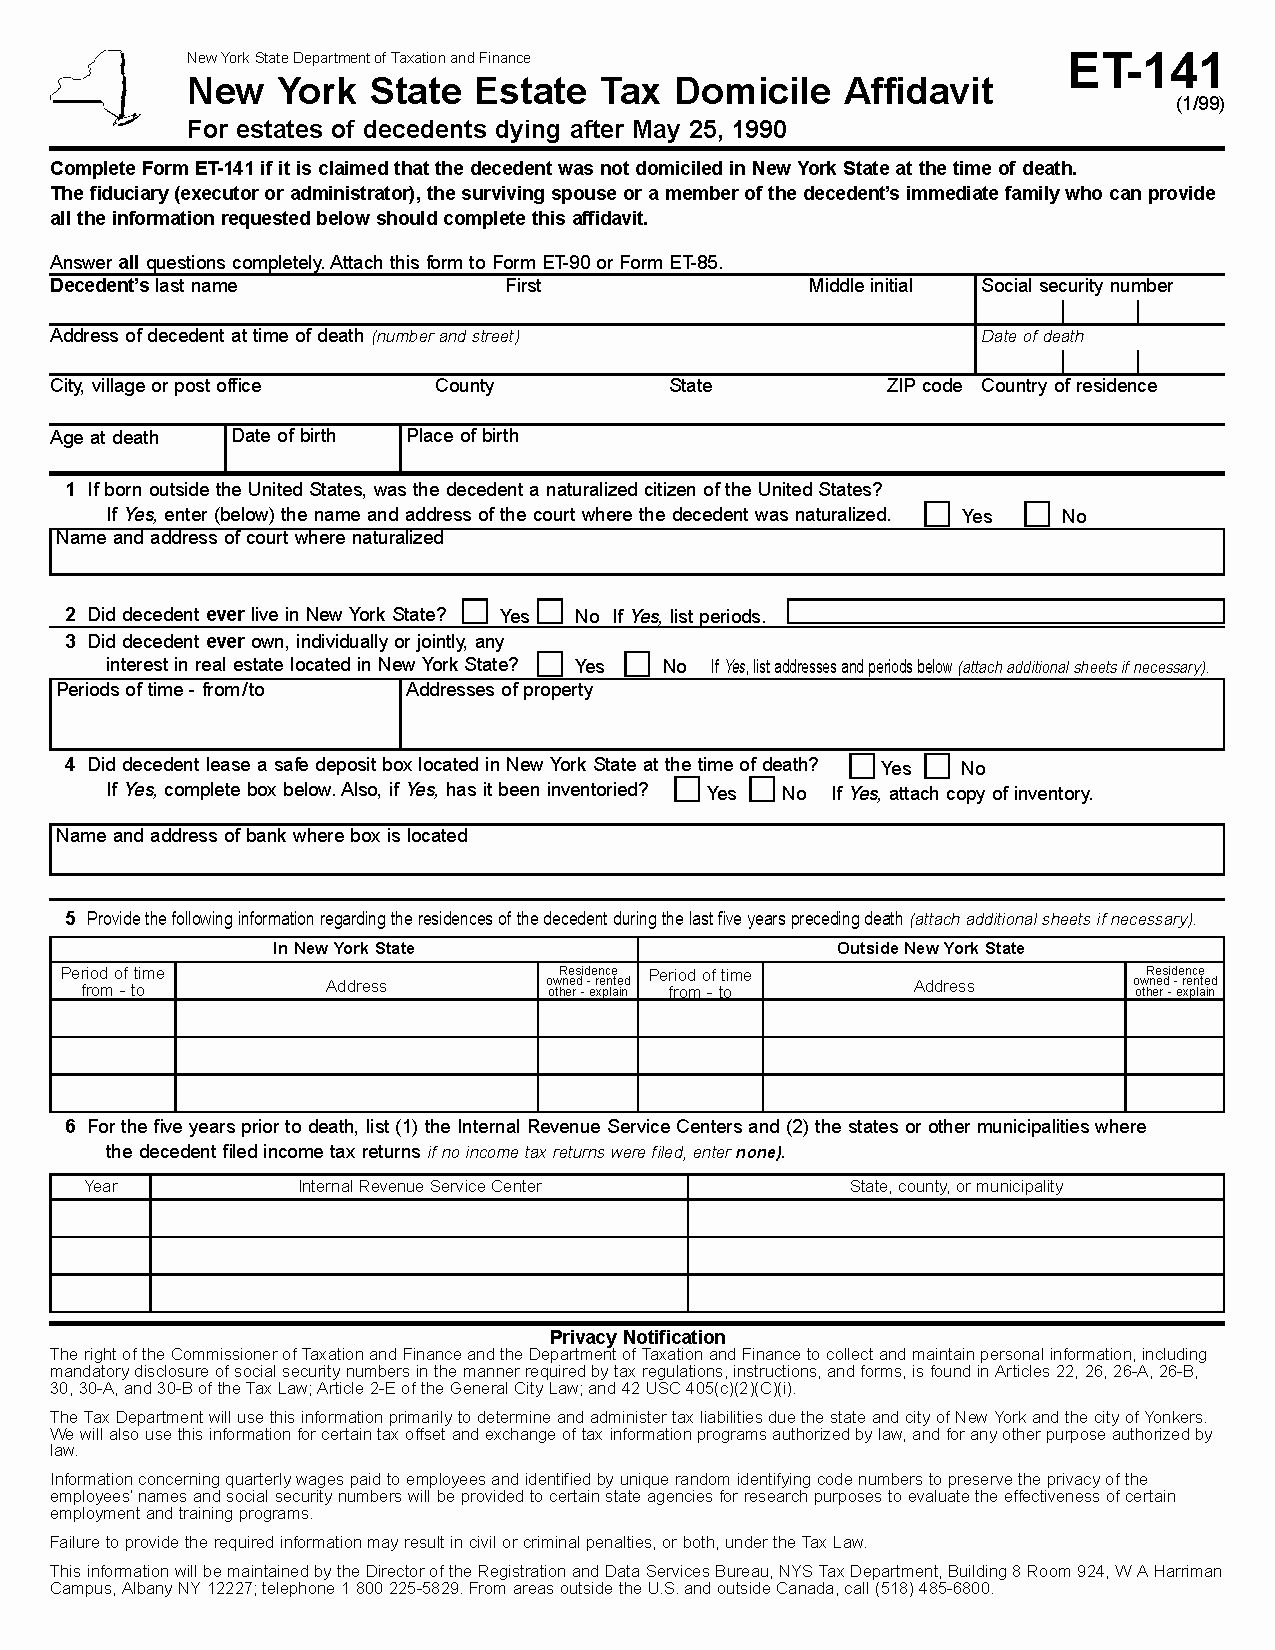 Affidavit Of No Income Beautiful form Et 141 New York State Estate Tax Domicile Affidavit